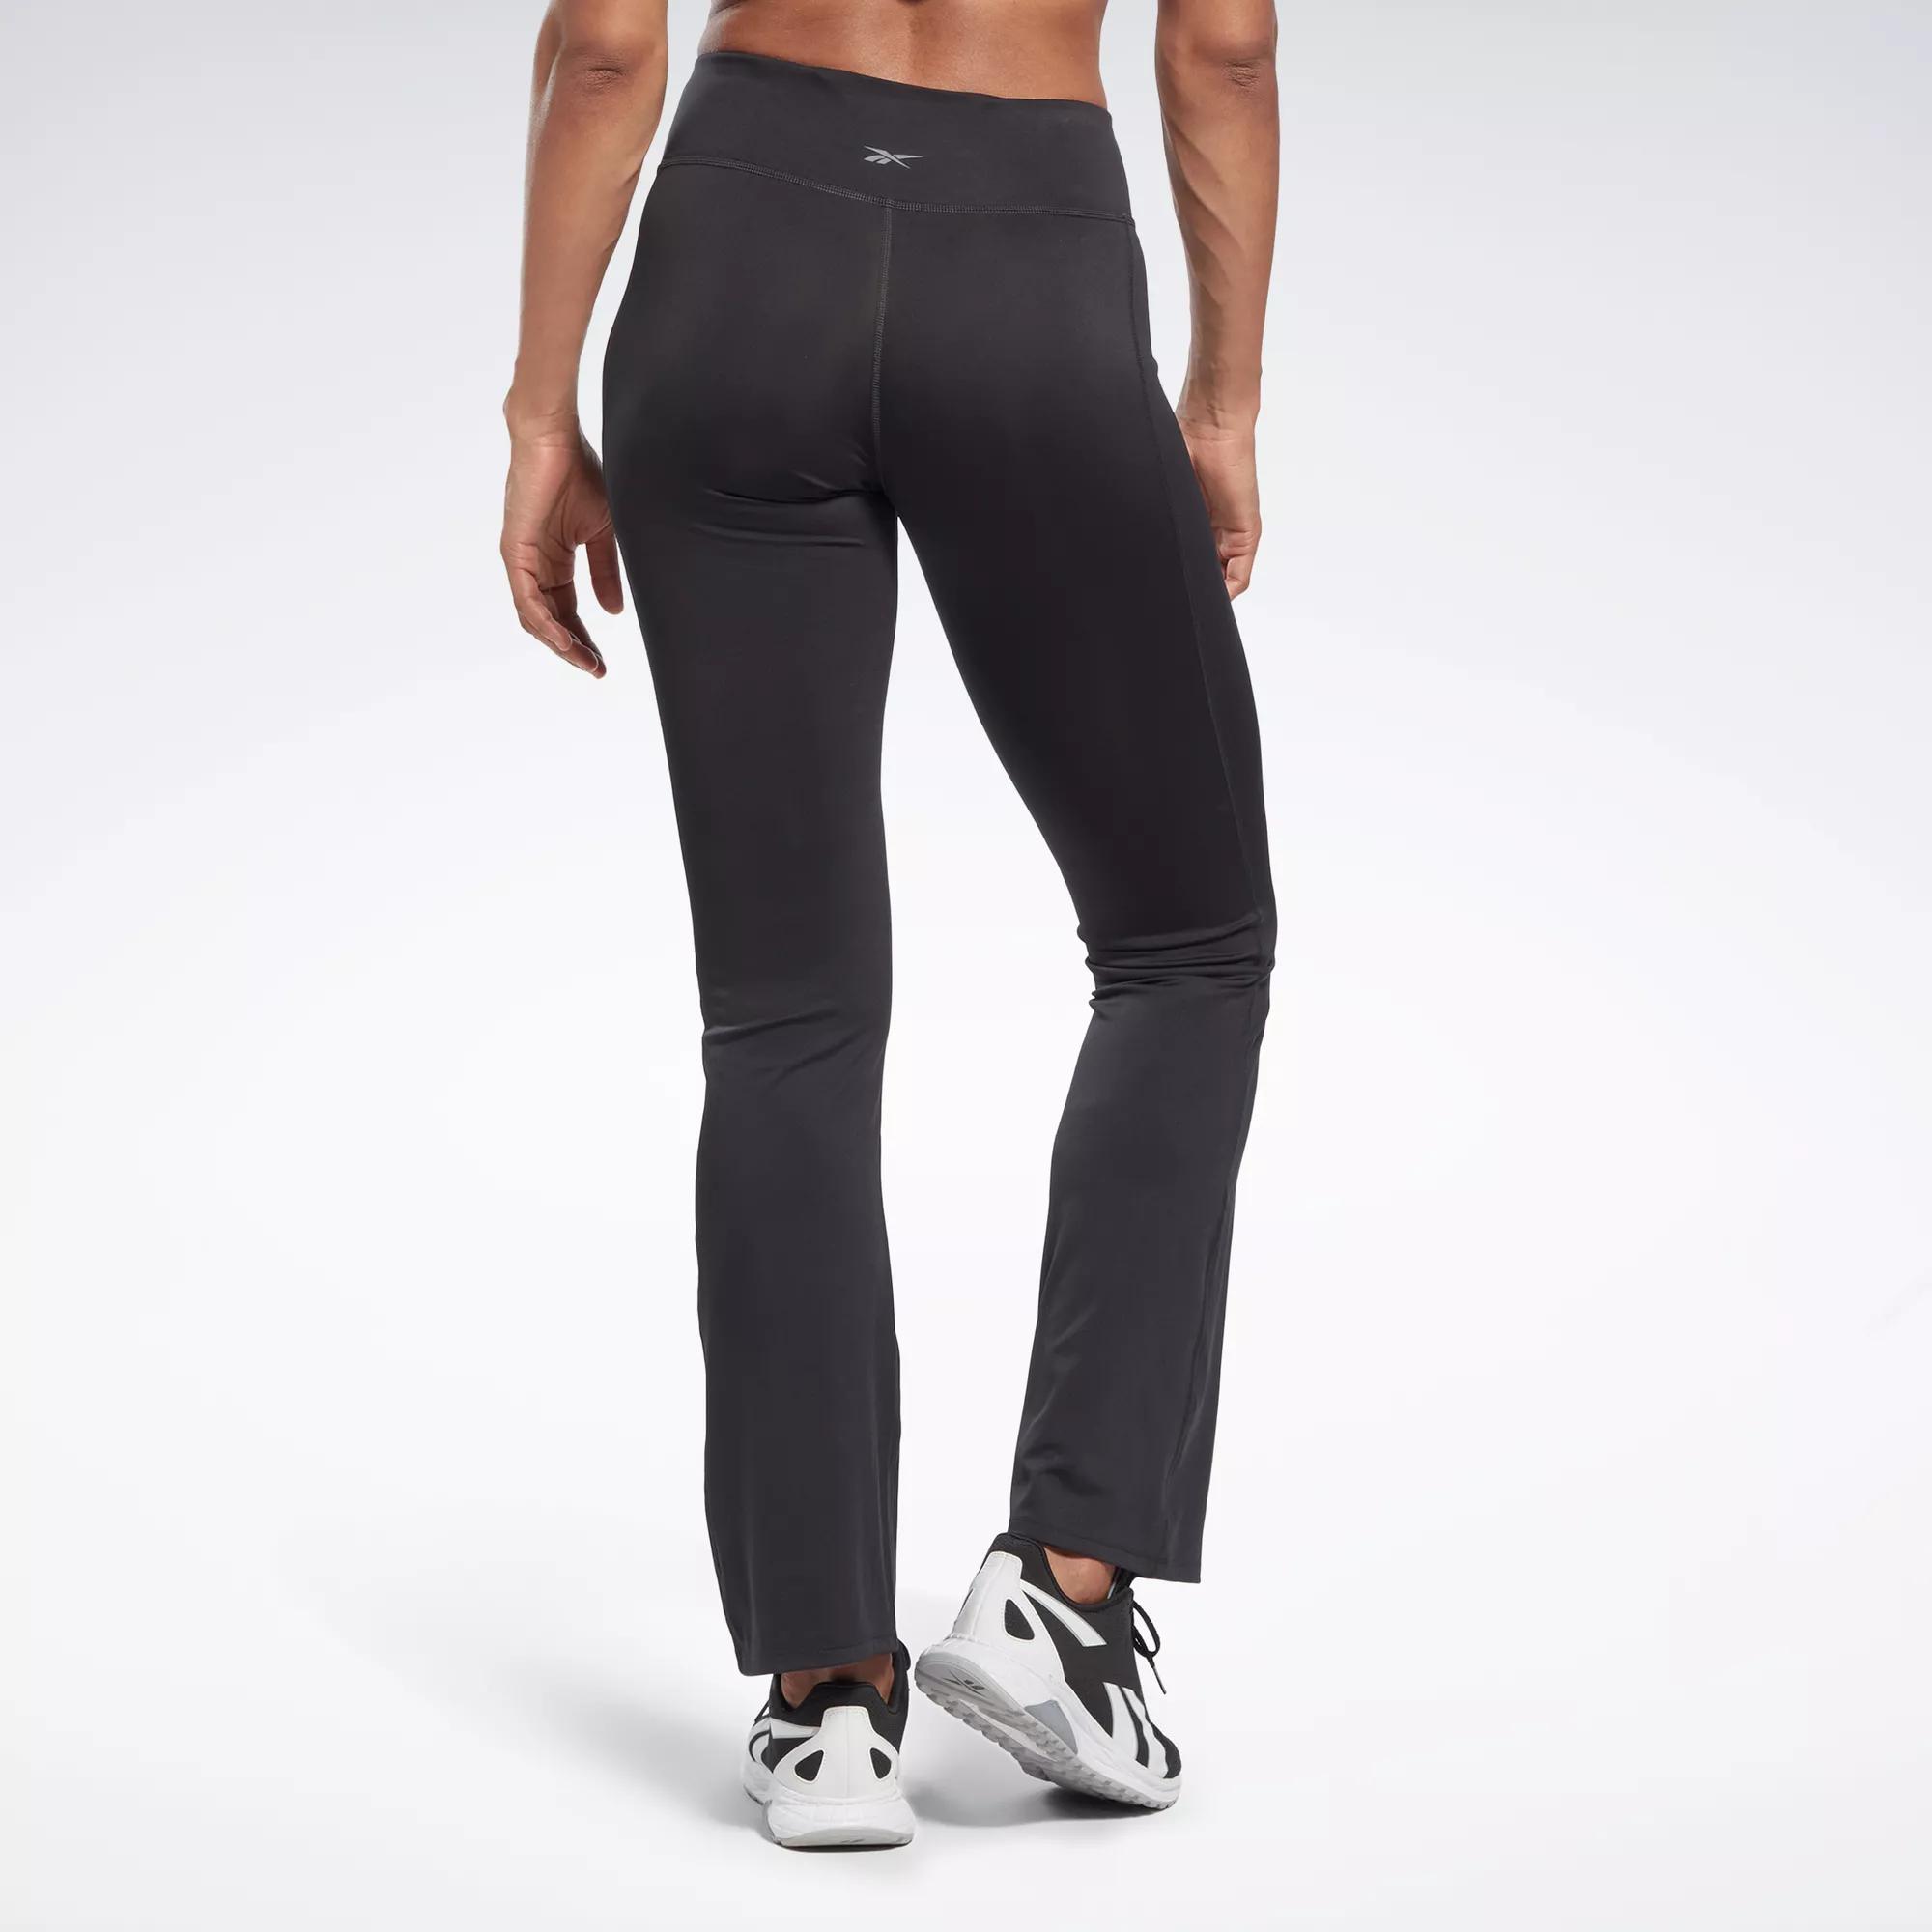 Reebok Women's Everyday High Waist Flair Bottom Yoga Pants with